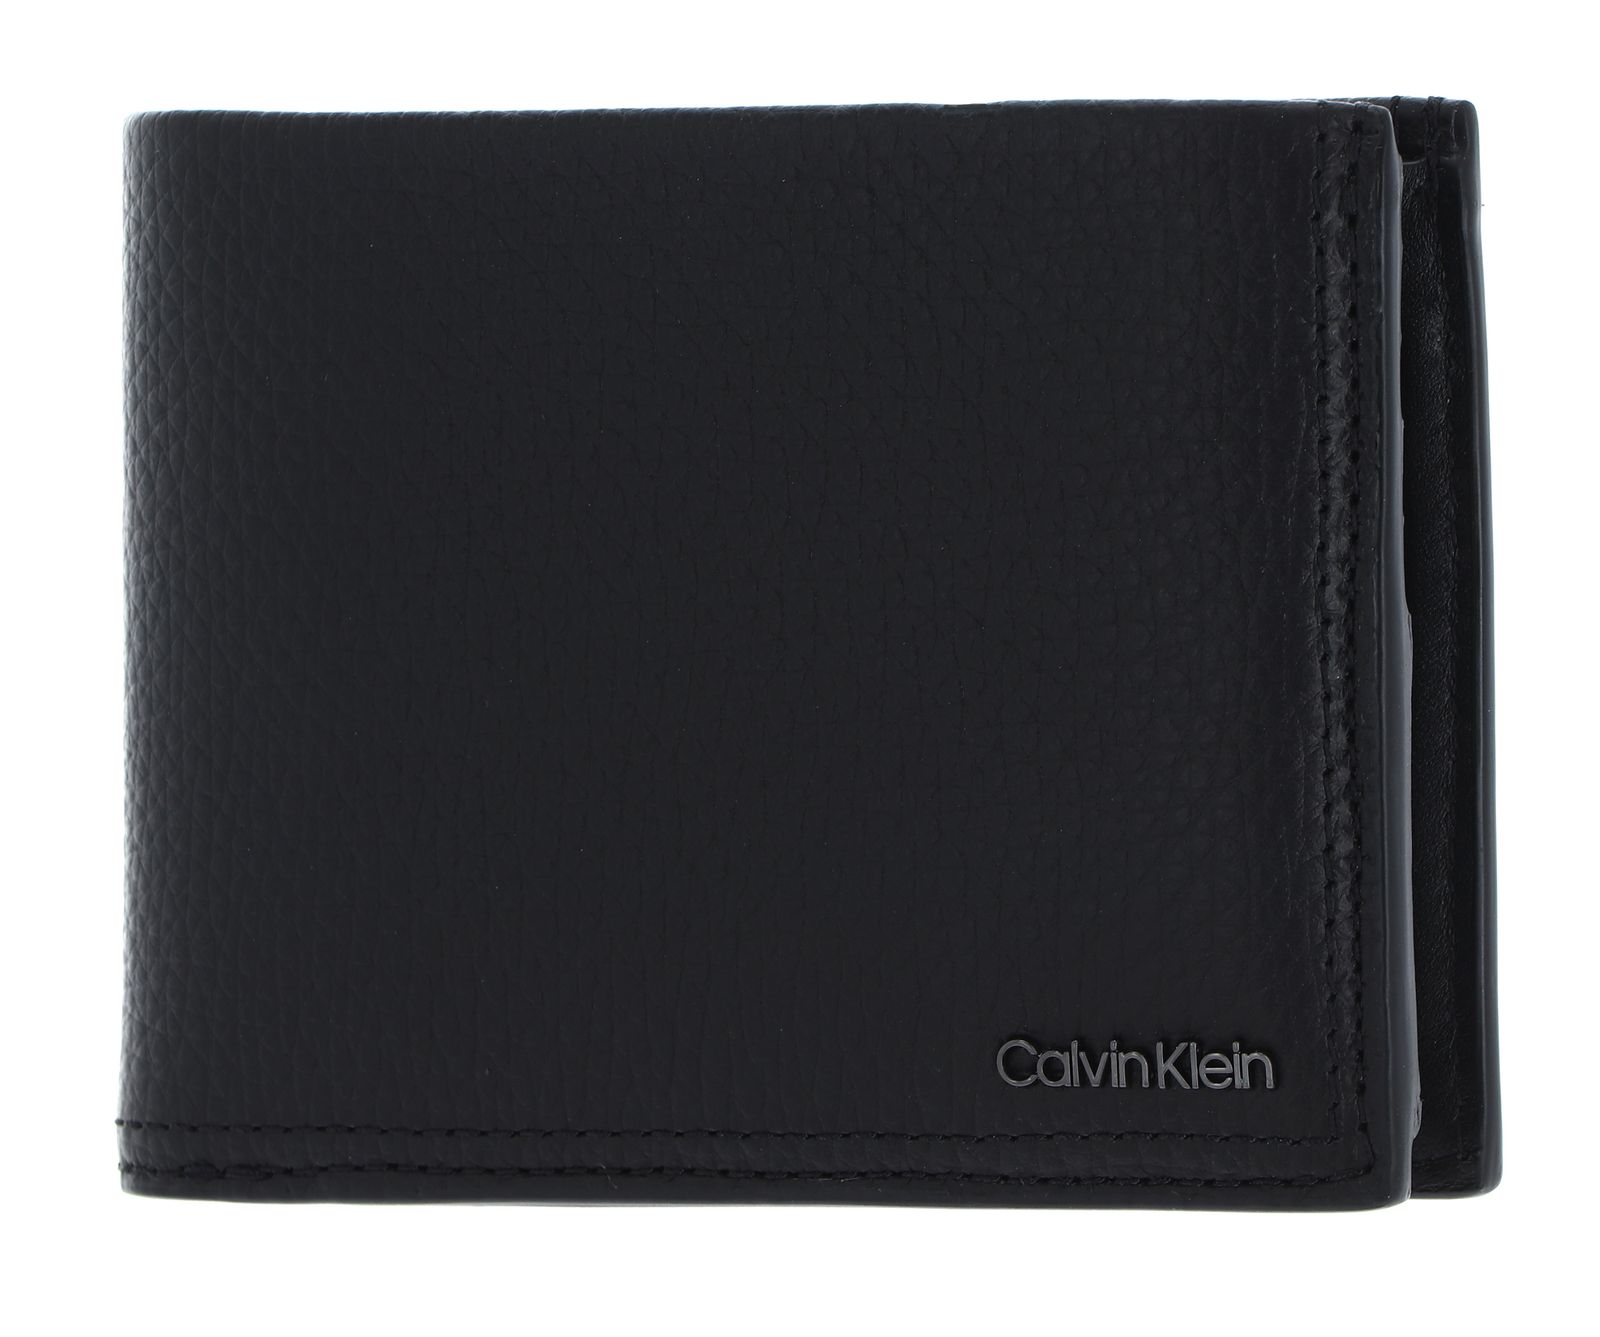 | Buy 10CC & / accessories online Coin Klein Minimalism CK bags, purses Calvin modeherz | Black W Trifold